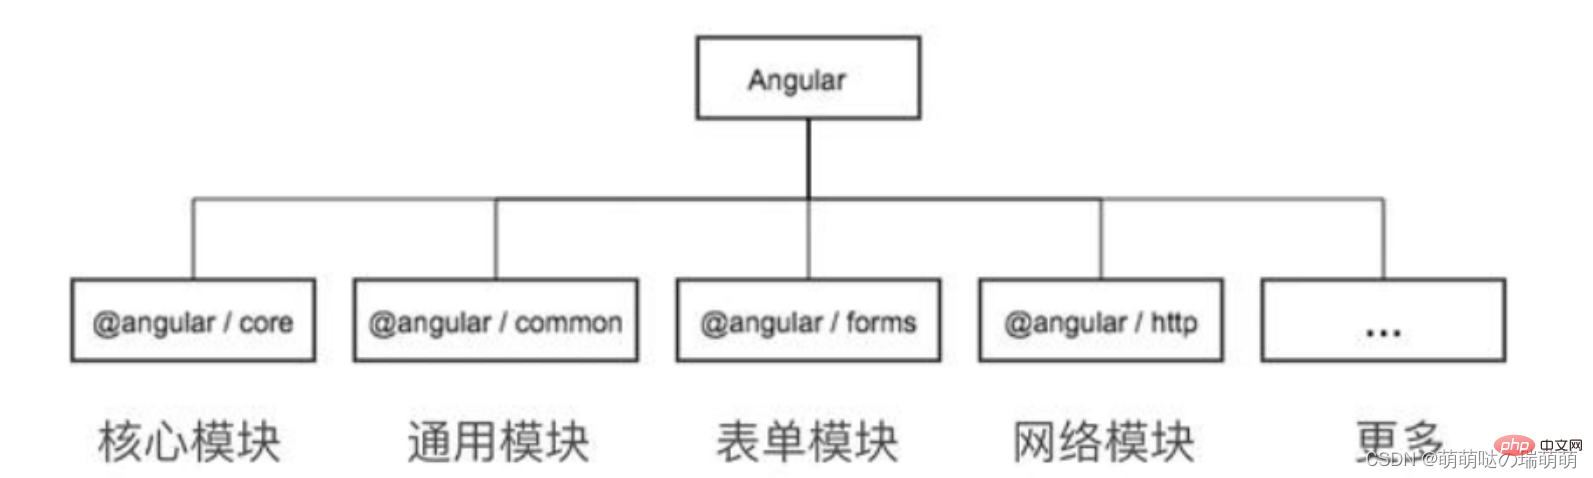 深入了解Angular（新手入门指南）